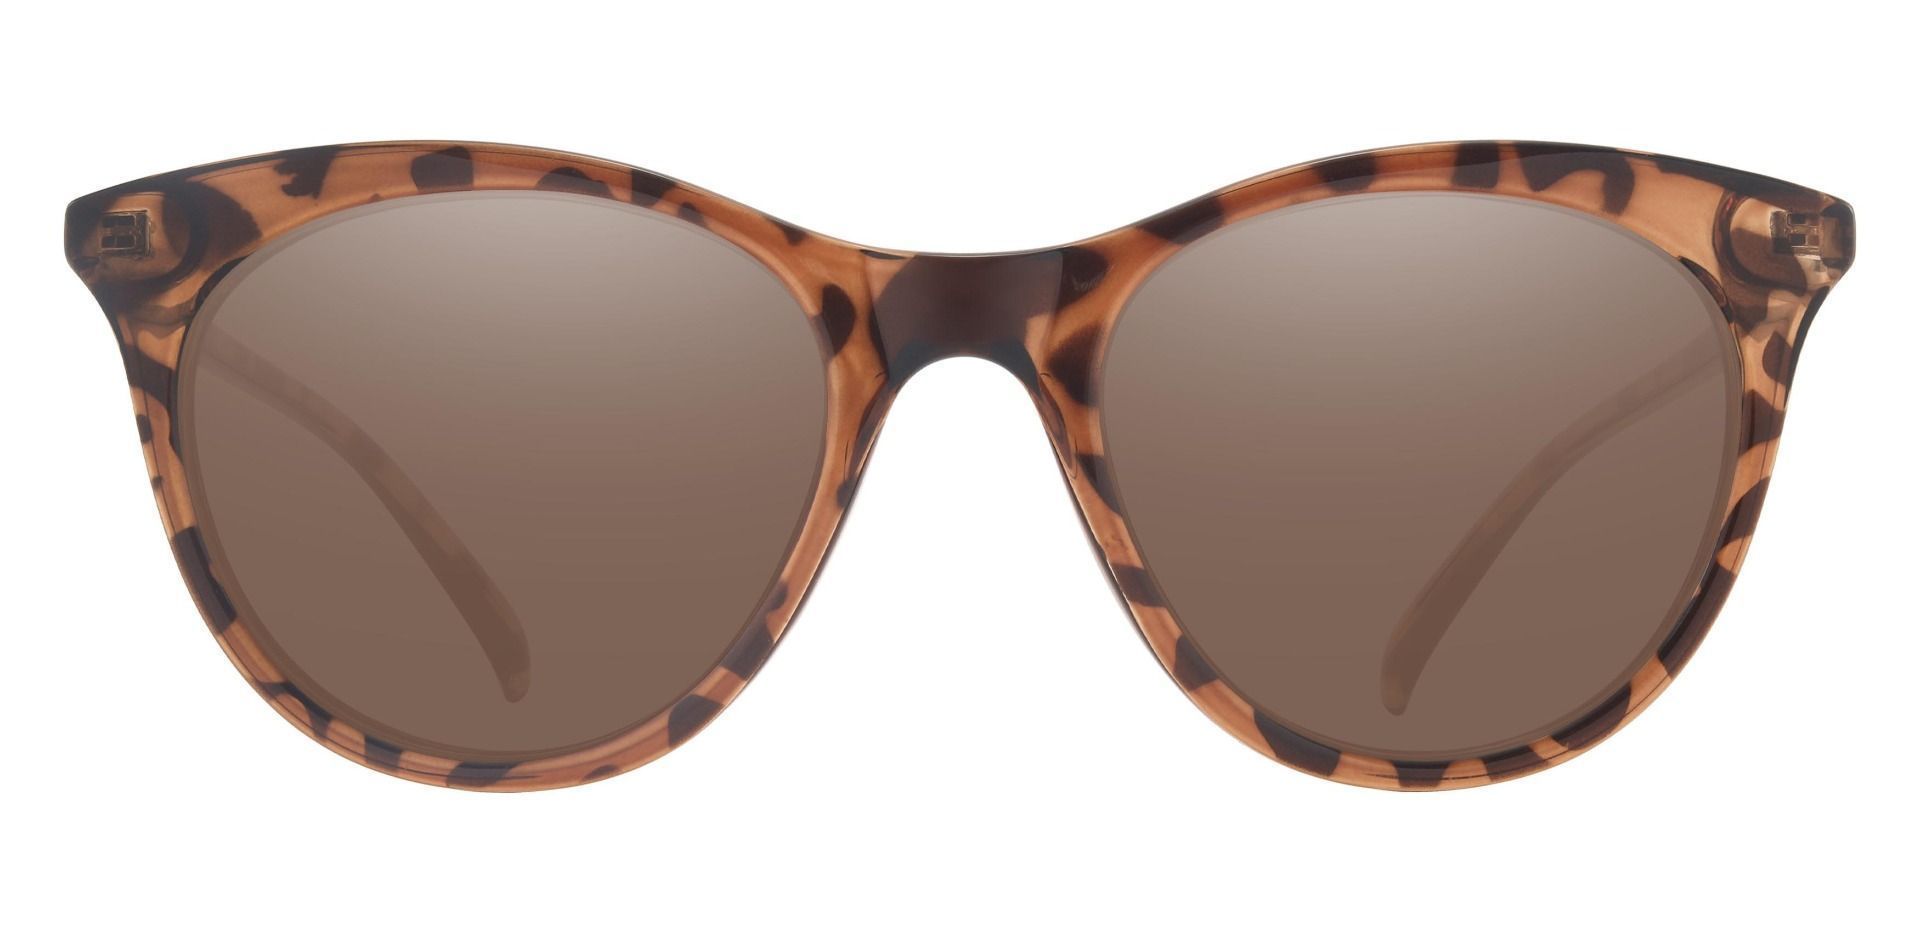 Valencia Cat Eye Prescription Sunglasses - Brown Frame With Brown Lenses